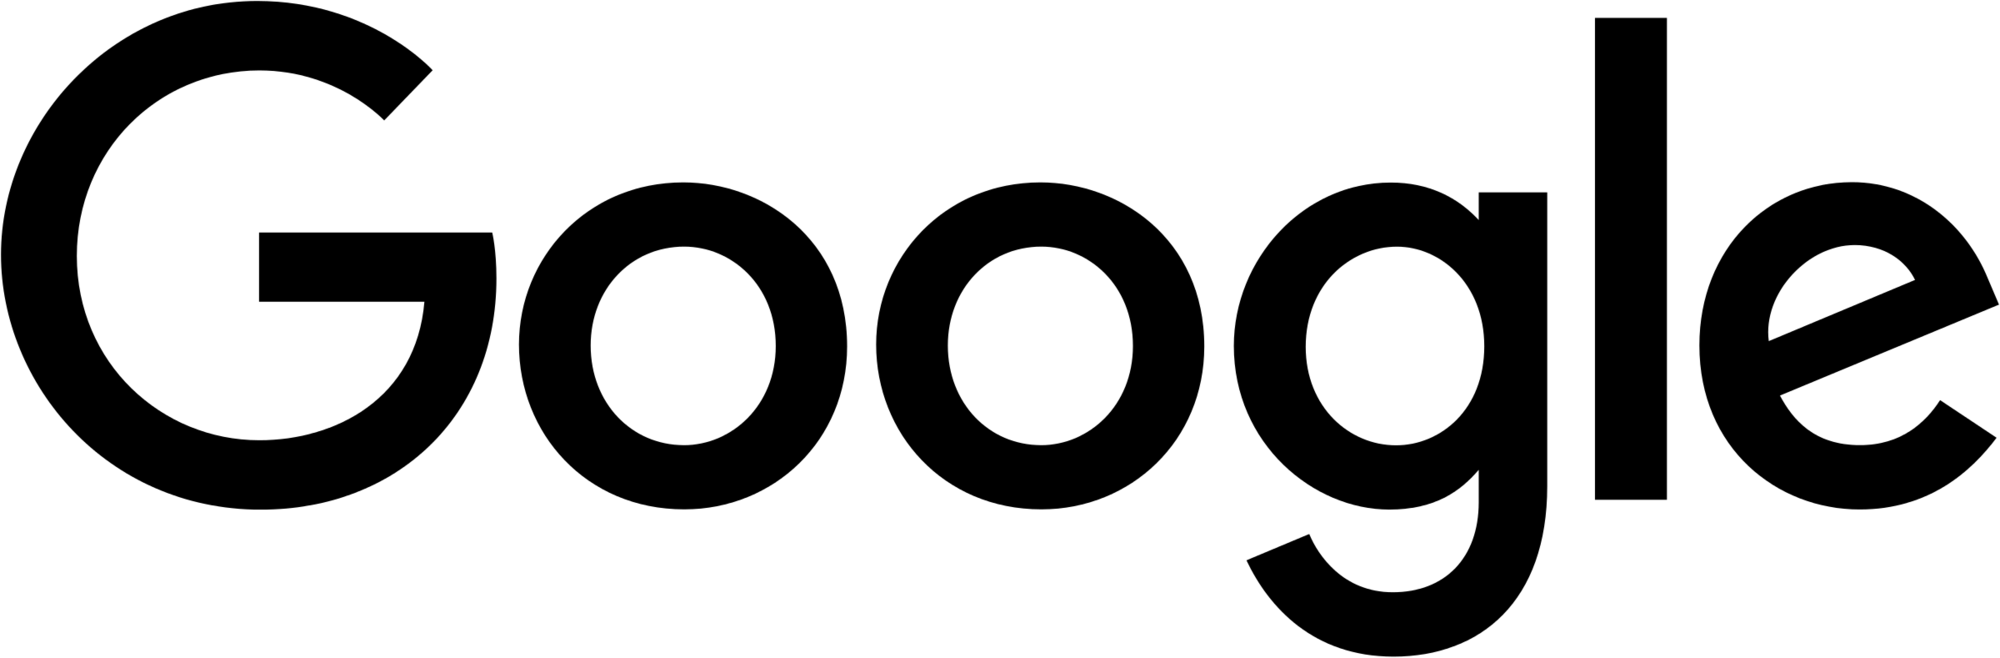 Black and White Google Logo - Google logo in black and white – Custom Signs, Monument Signs, & LED ...